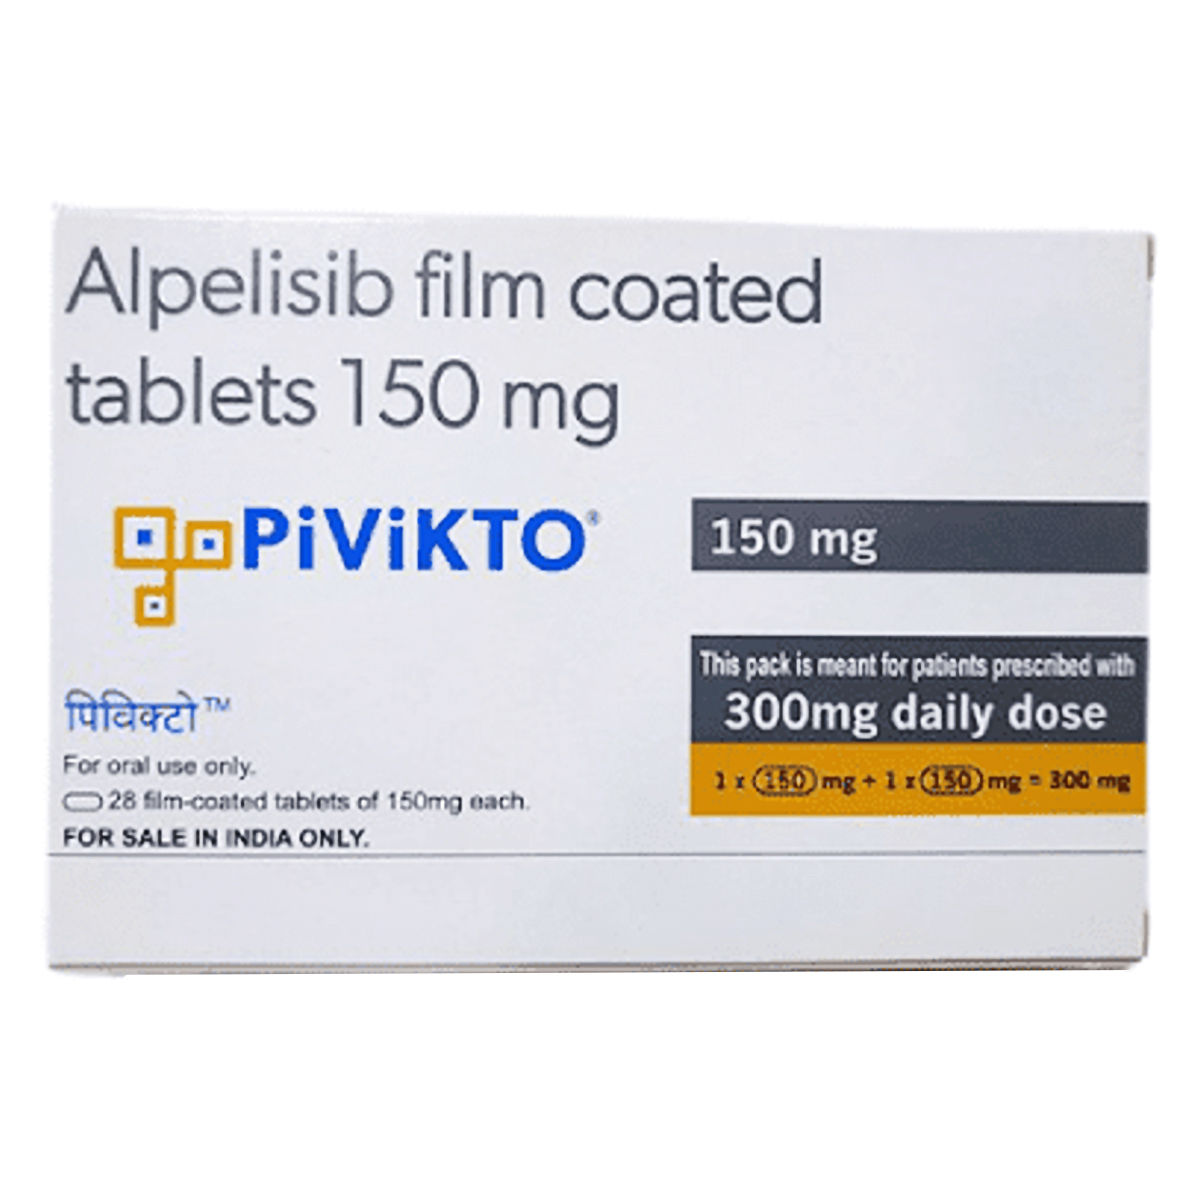 Buy Pivikto 150 mg Tablet 28's Online